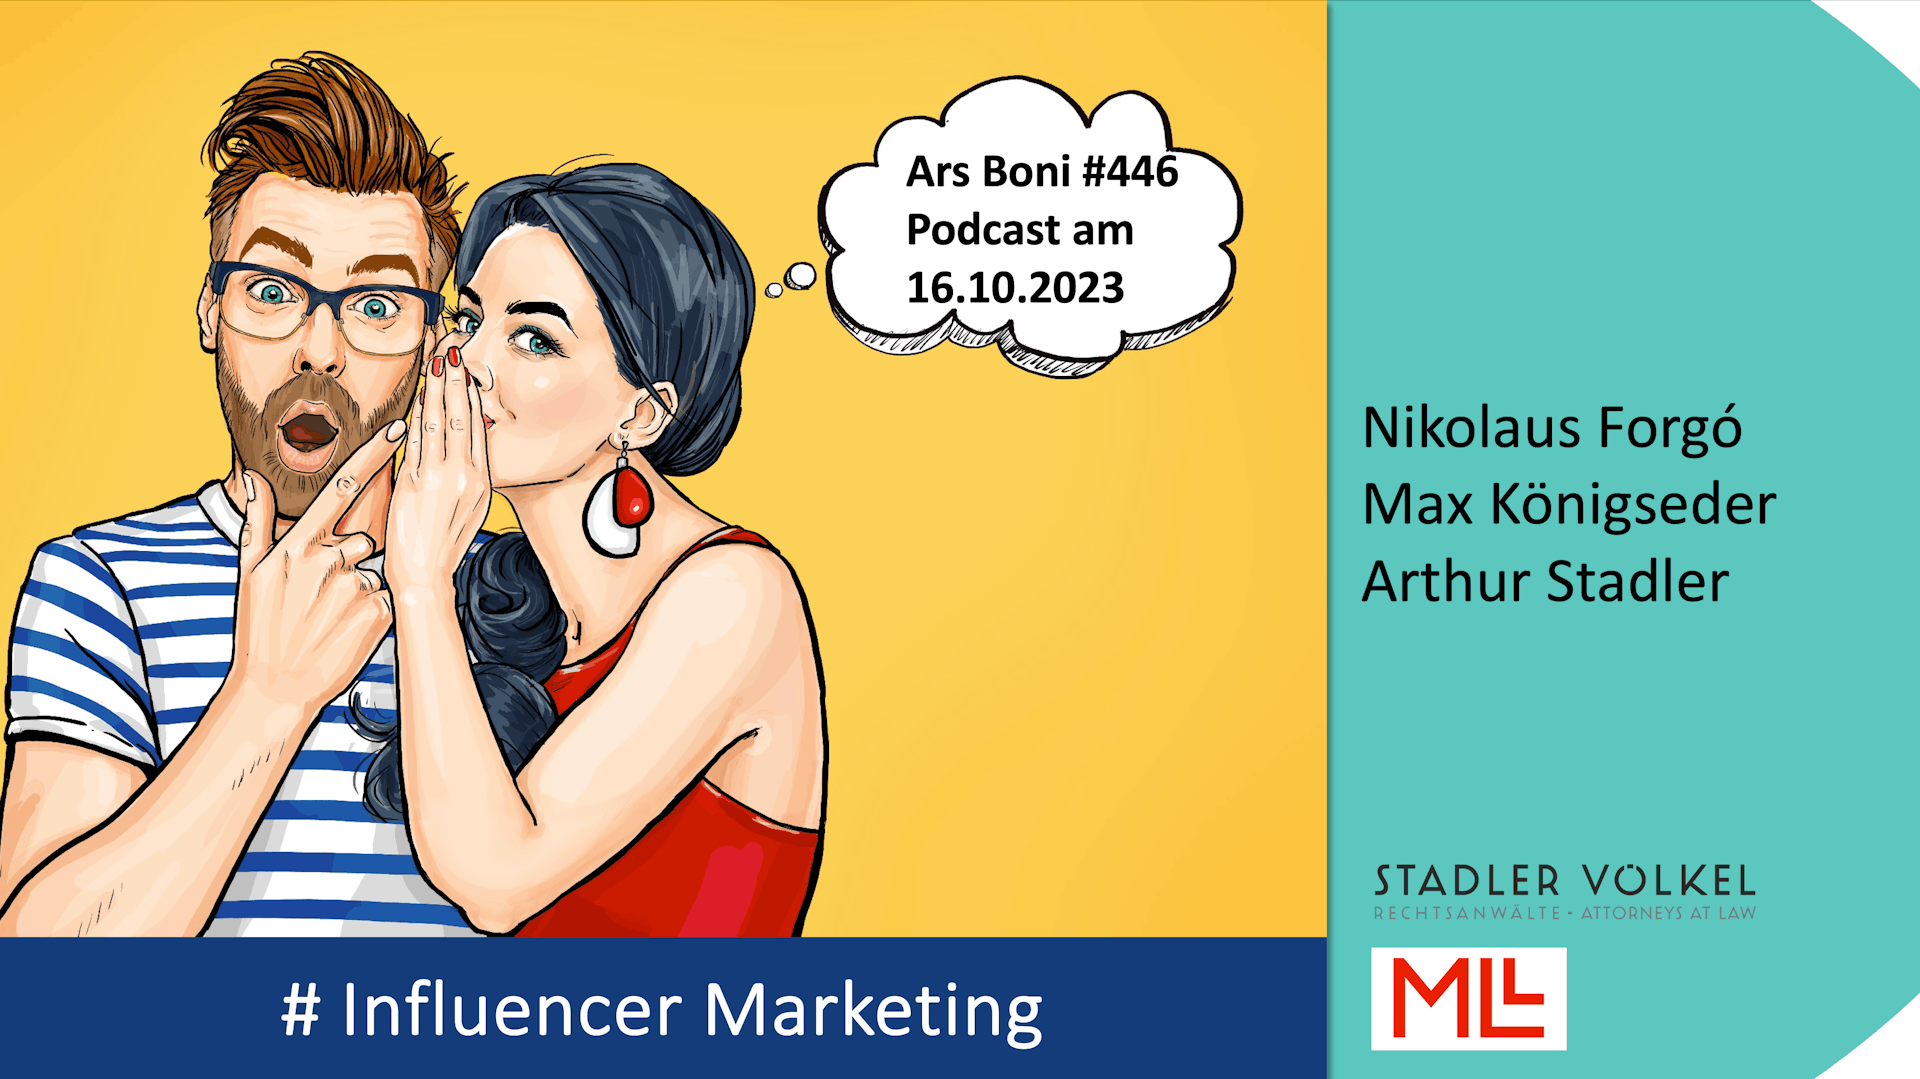 ARS BONI Podcast #446 - Influencer Marketing